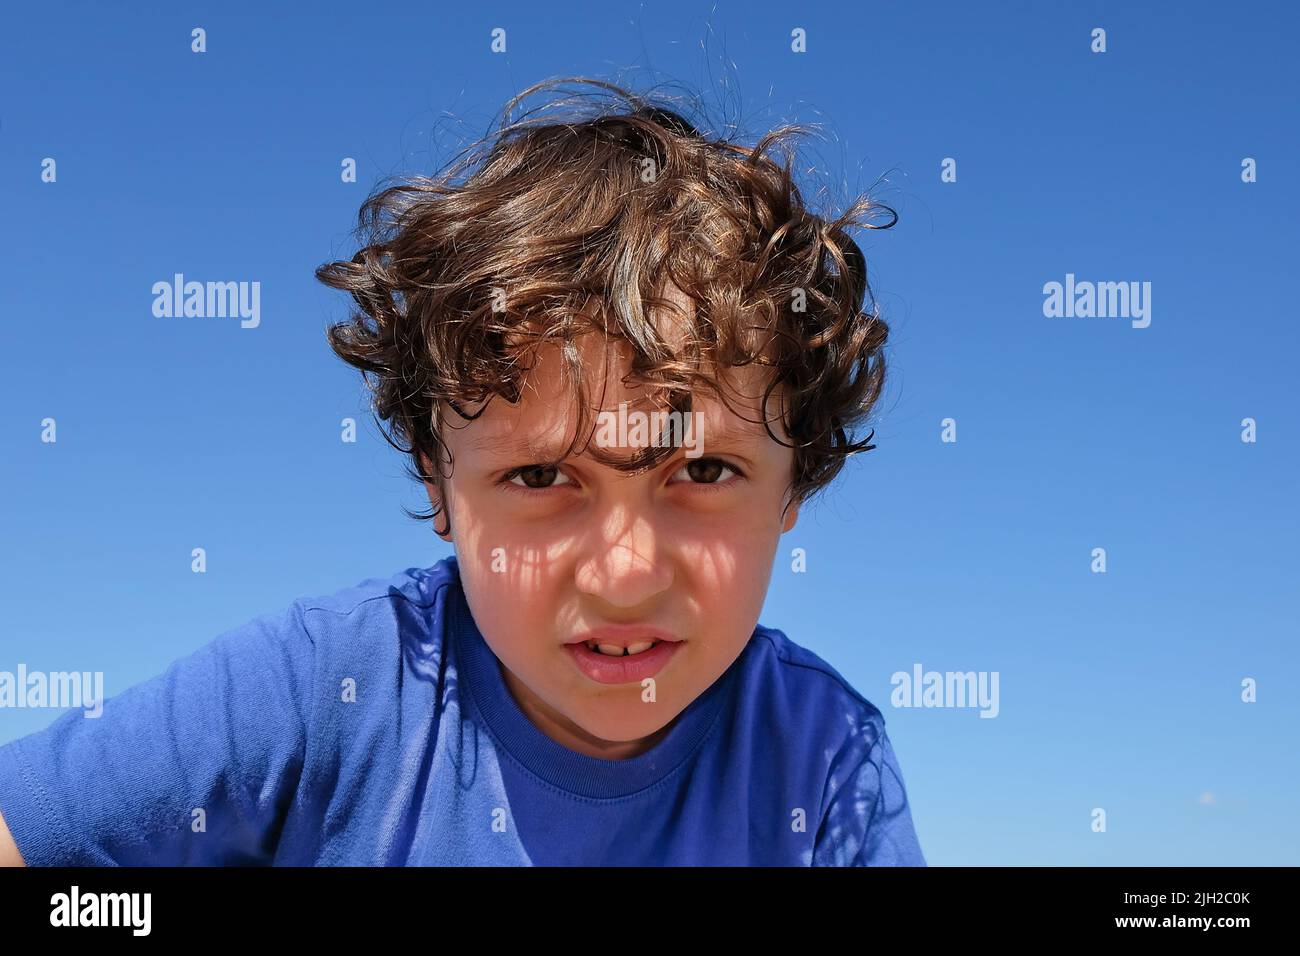 Retrato de pequeño niño monótono árabe preescolar con ojos de avellana y emoción cara mirada emocionante con curiosidad e interés. Foto de stock